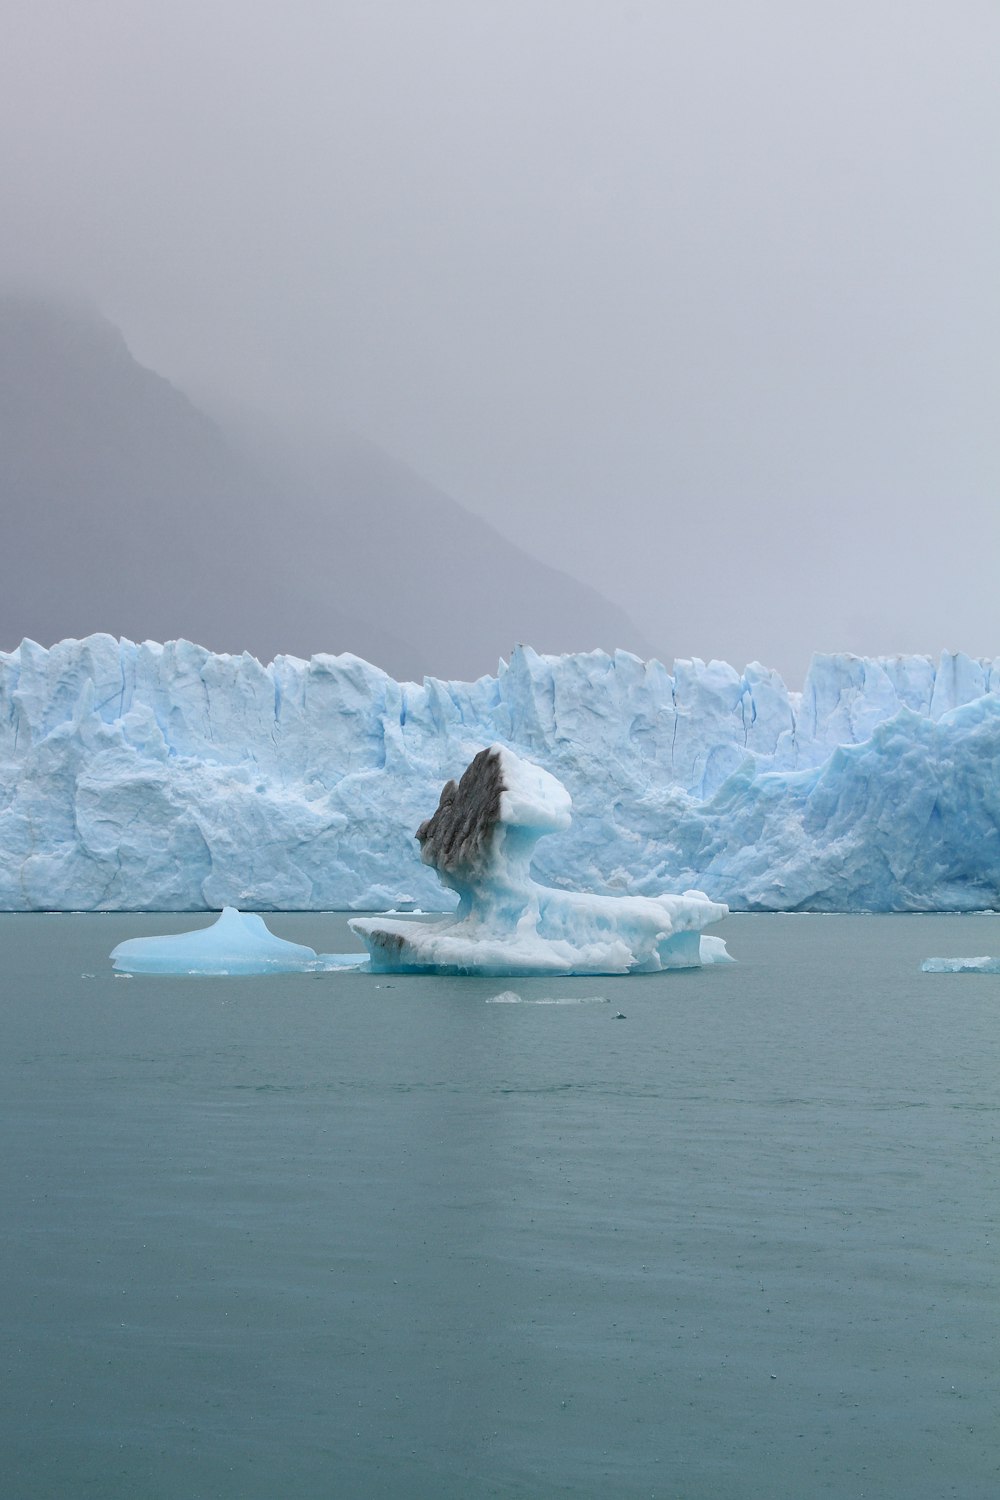 iceberg on body of water at daytime